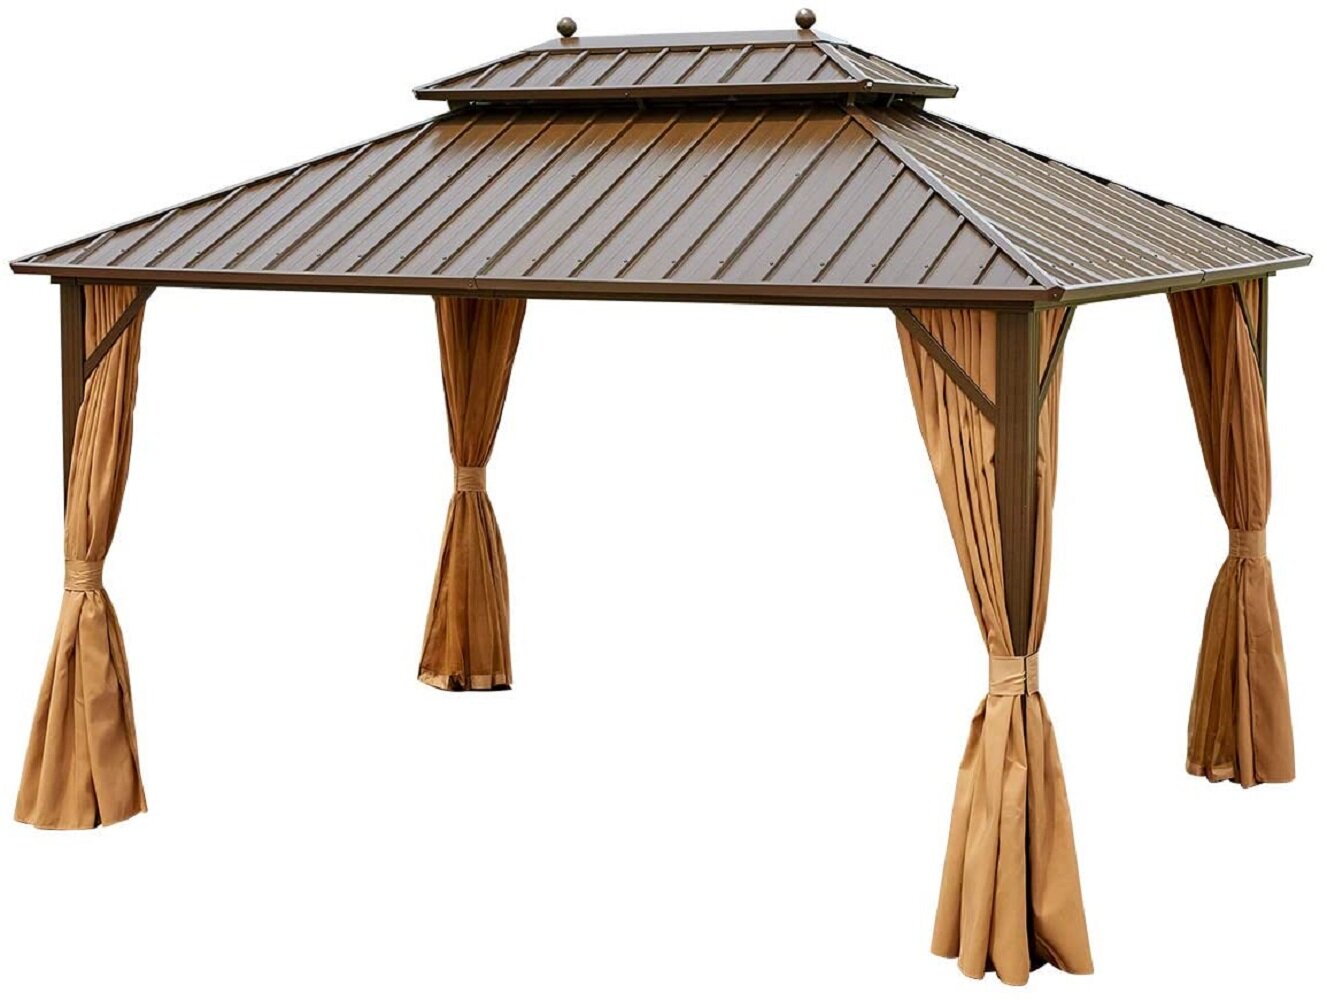 10'x13' Double Top Gazebo Canopy w/ Mesh Netting & Curtains Patio Garden Outdoor 